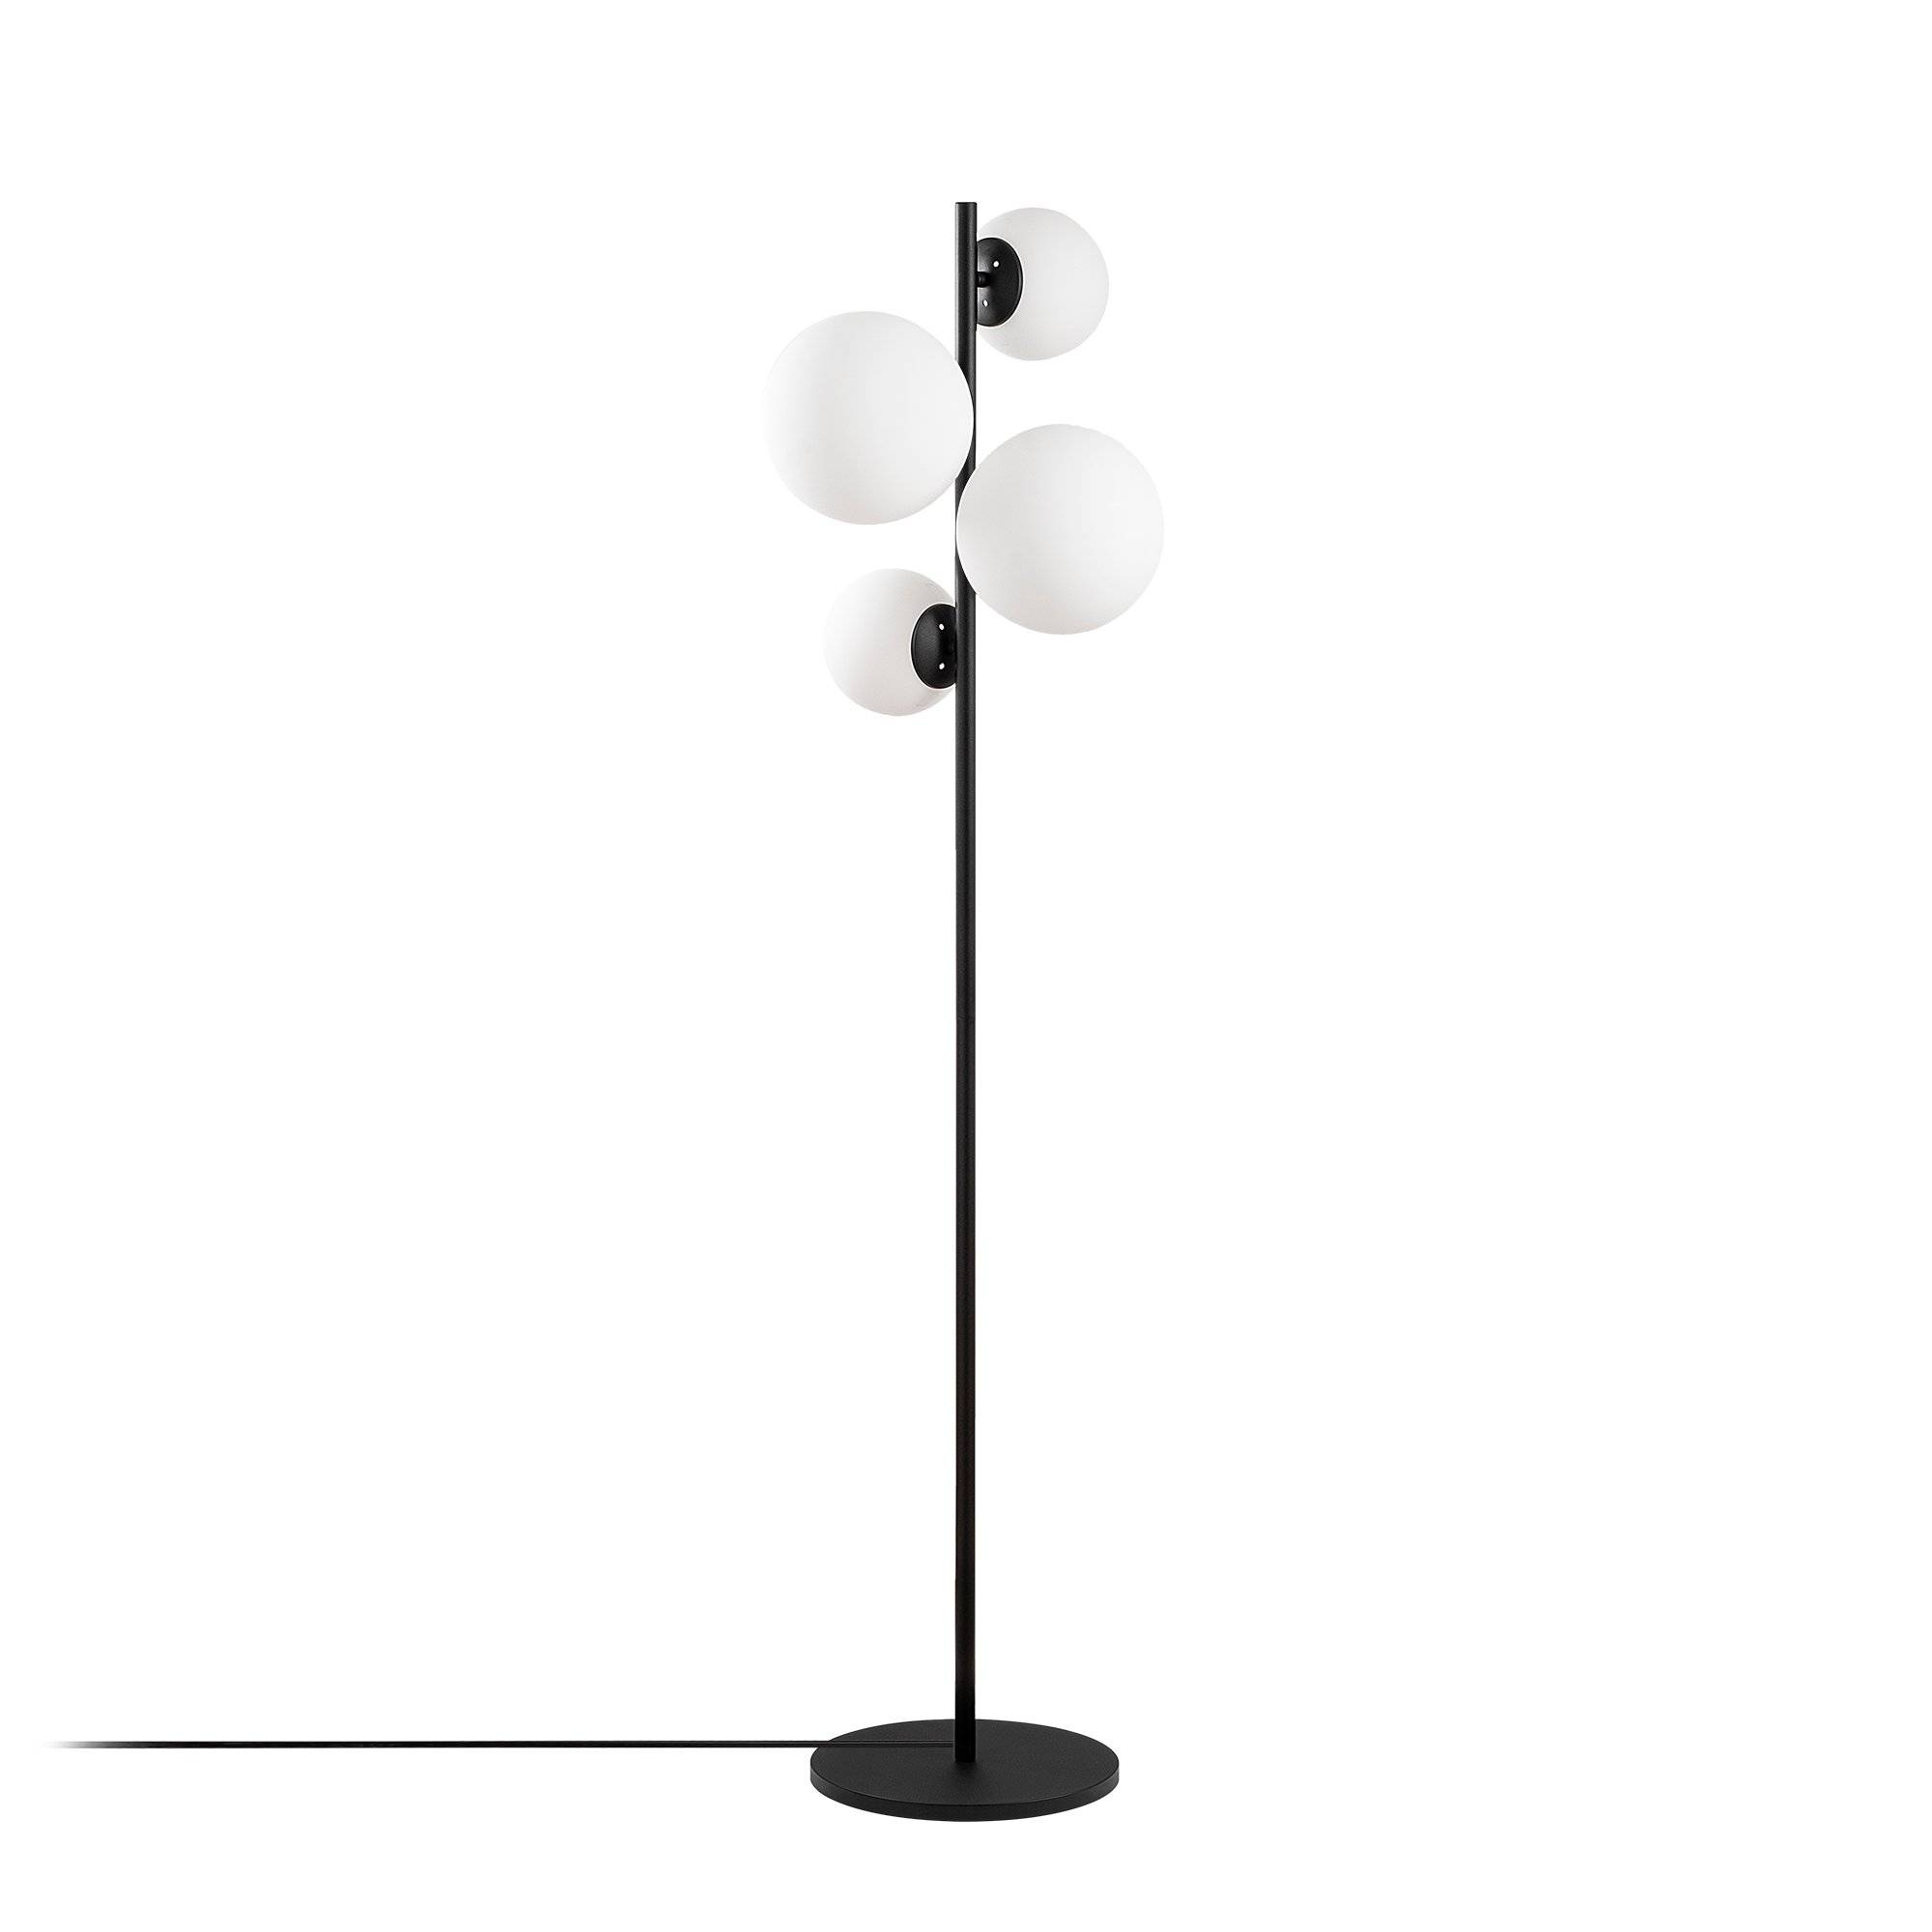 Chaga 4-lichts bolvormige vloerlamp H163cm Wit glas en zwart metaal